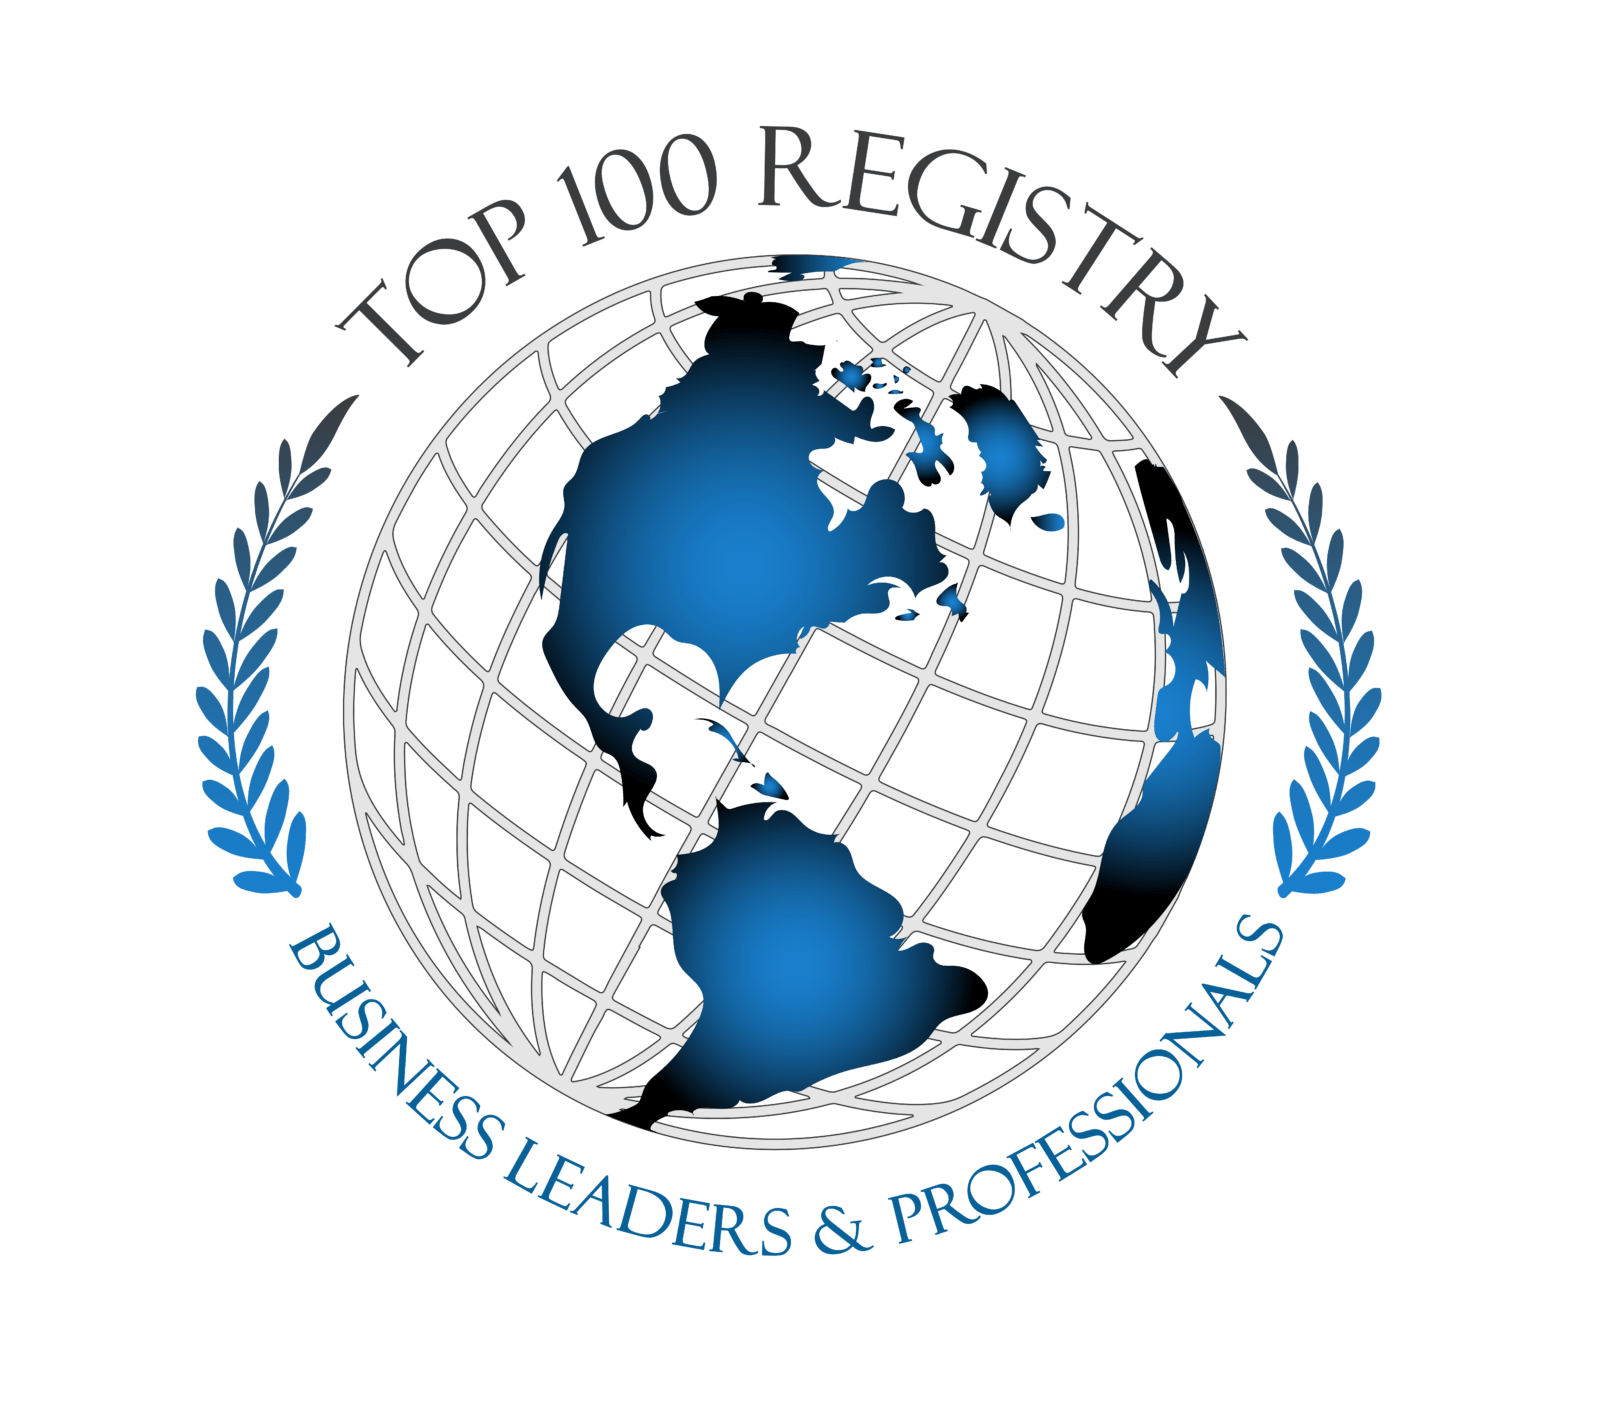 Top 100 Registry Inc.